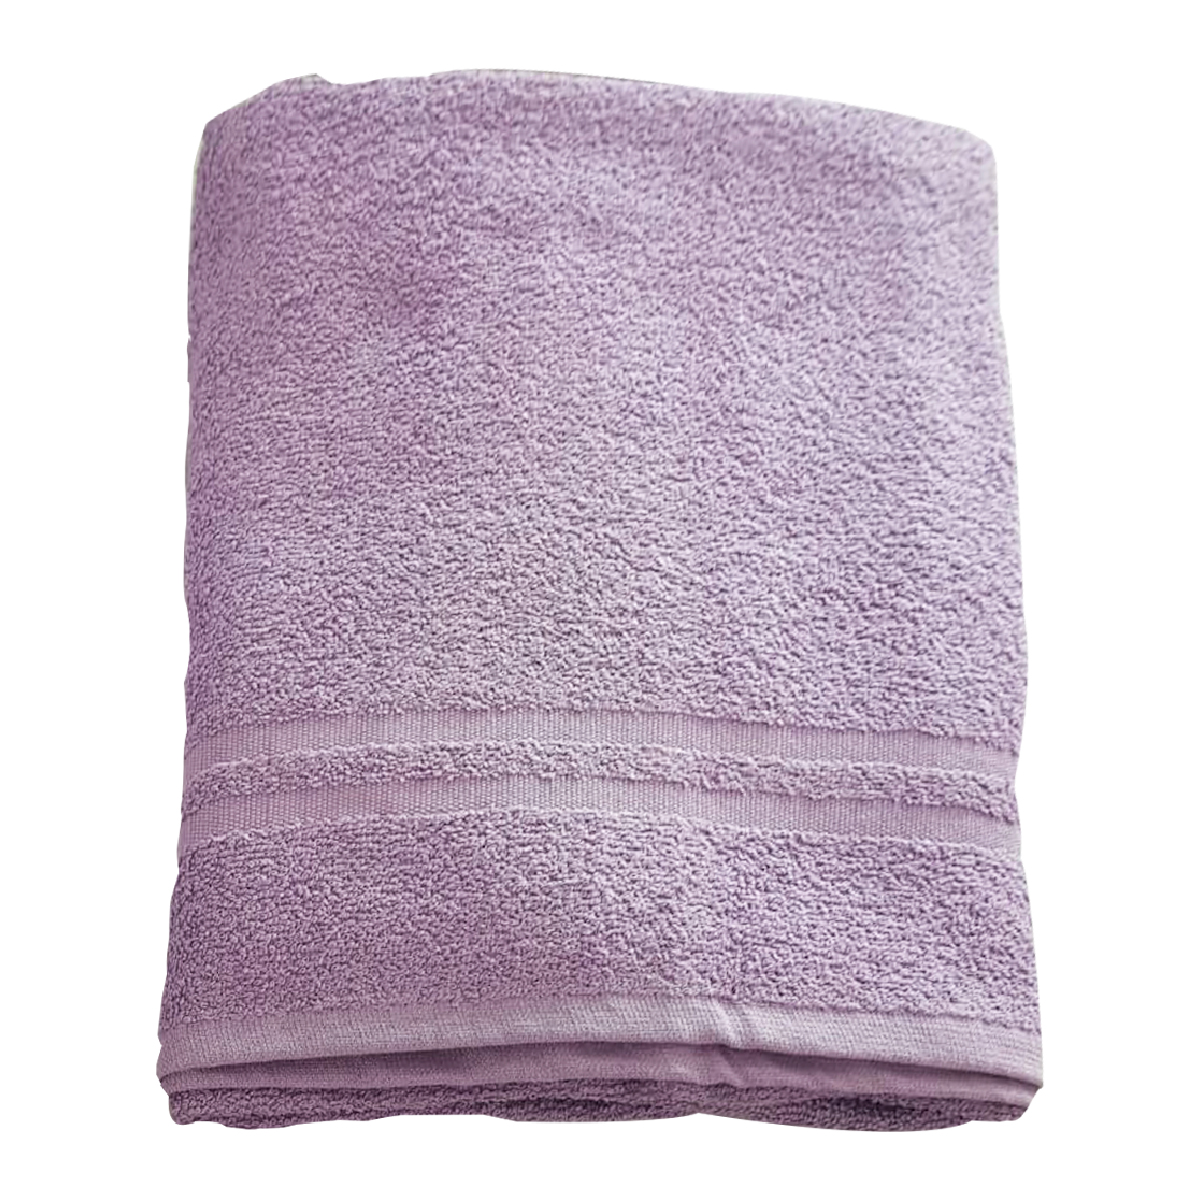 Zenith Towel Medium size 50X100CM, 3317